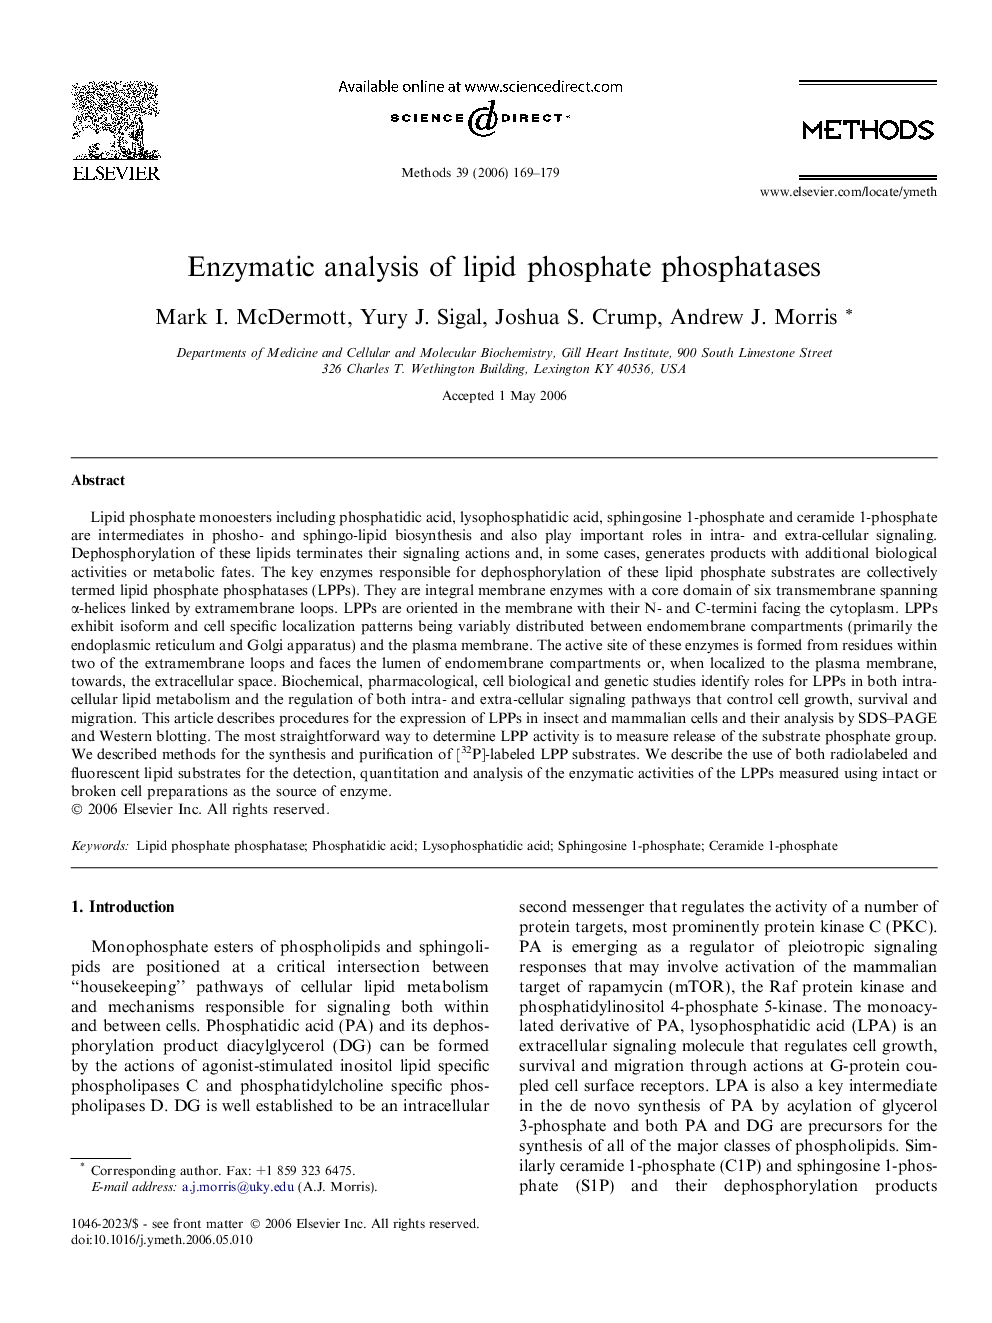 Enzymatic analysis of lipid phosphate phosphatases